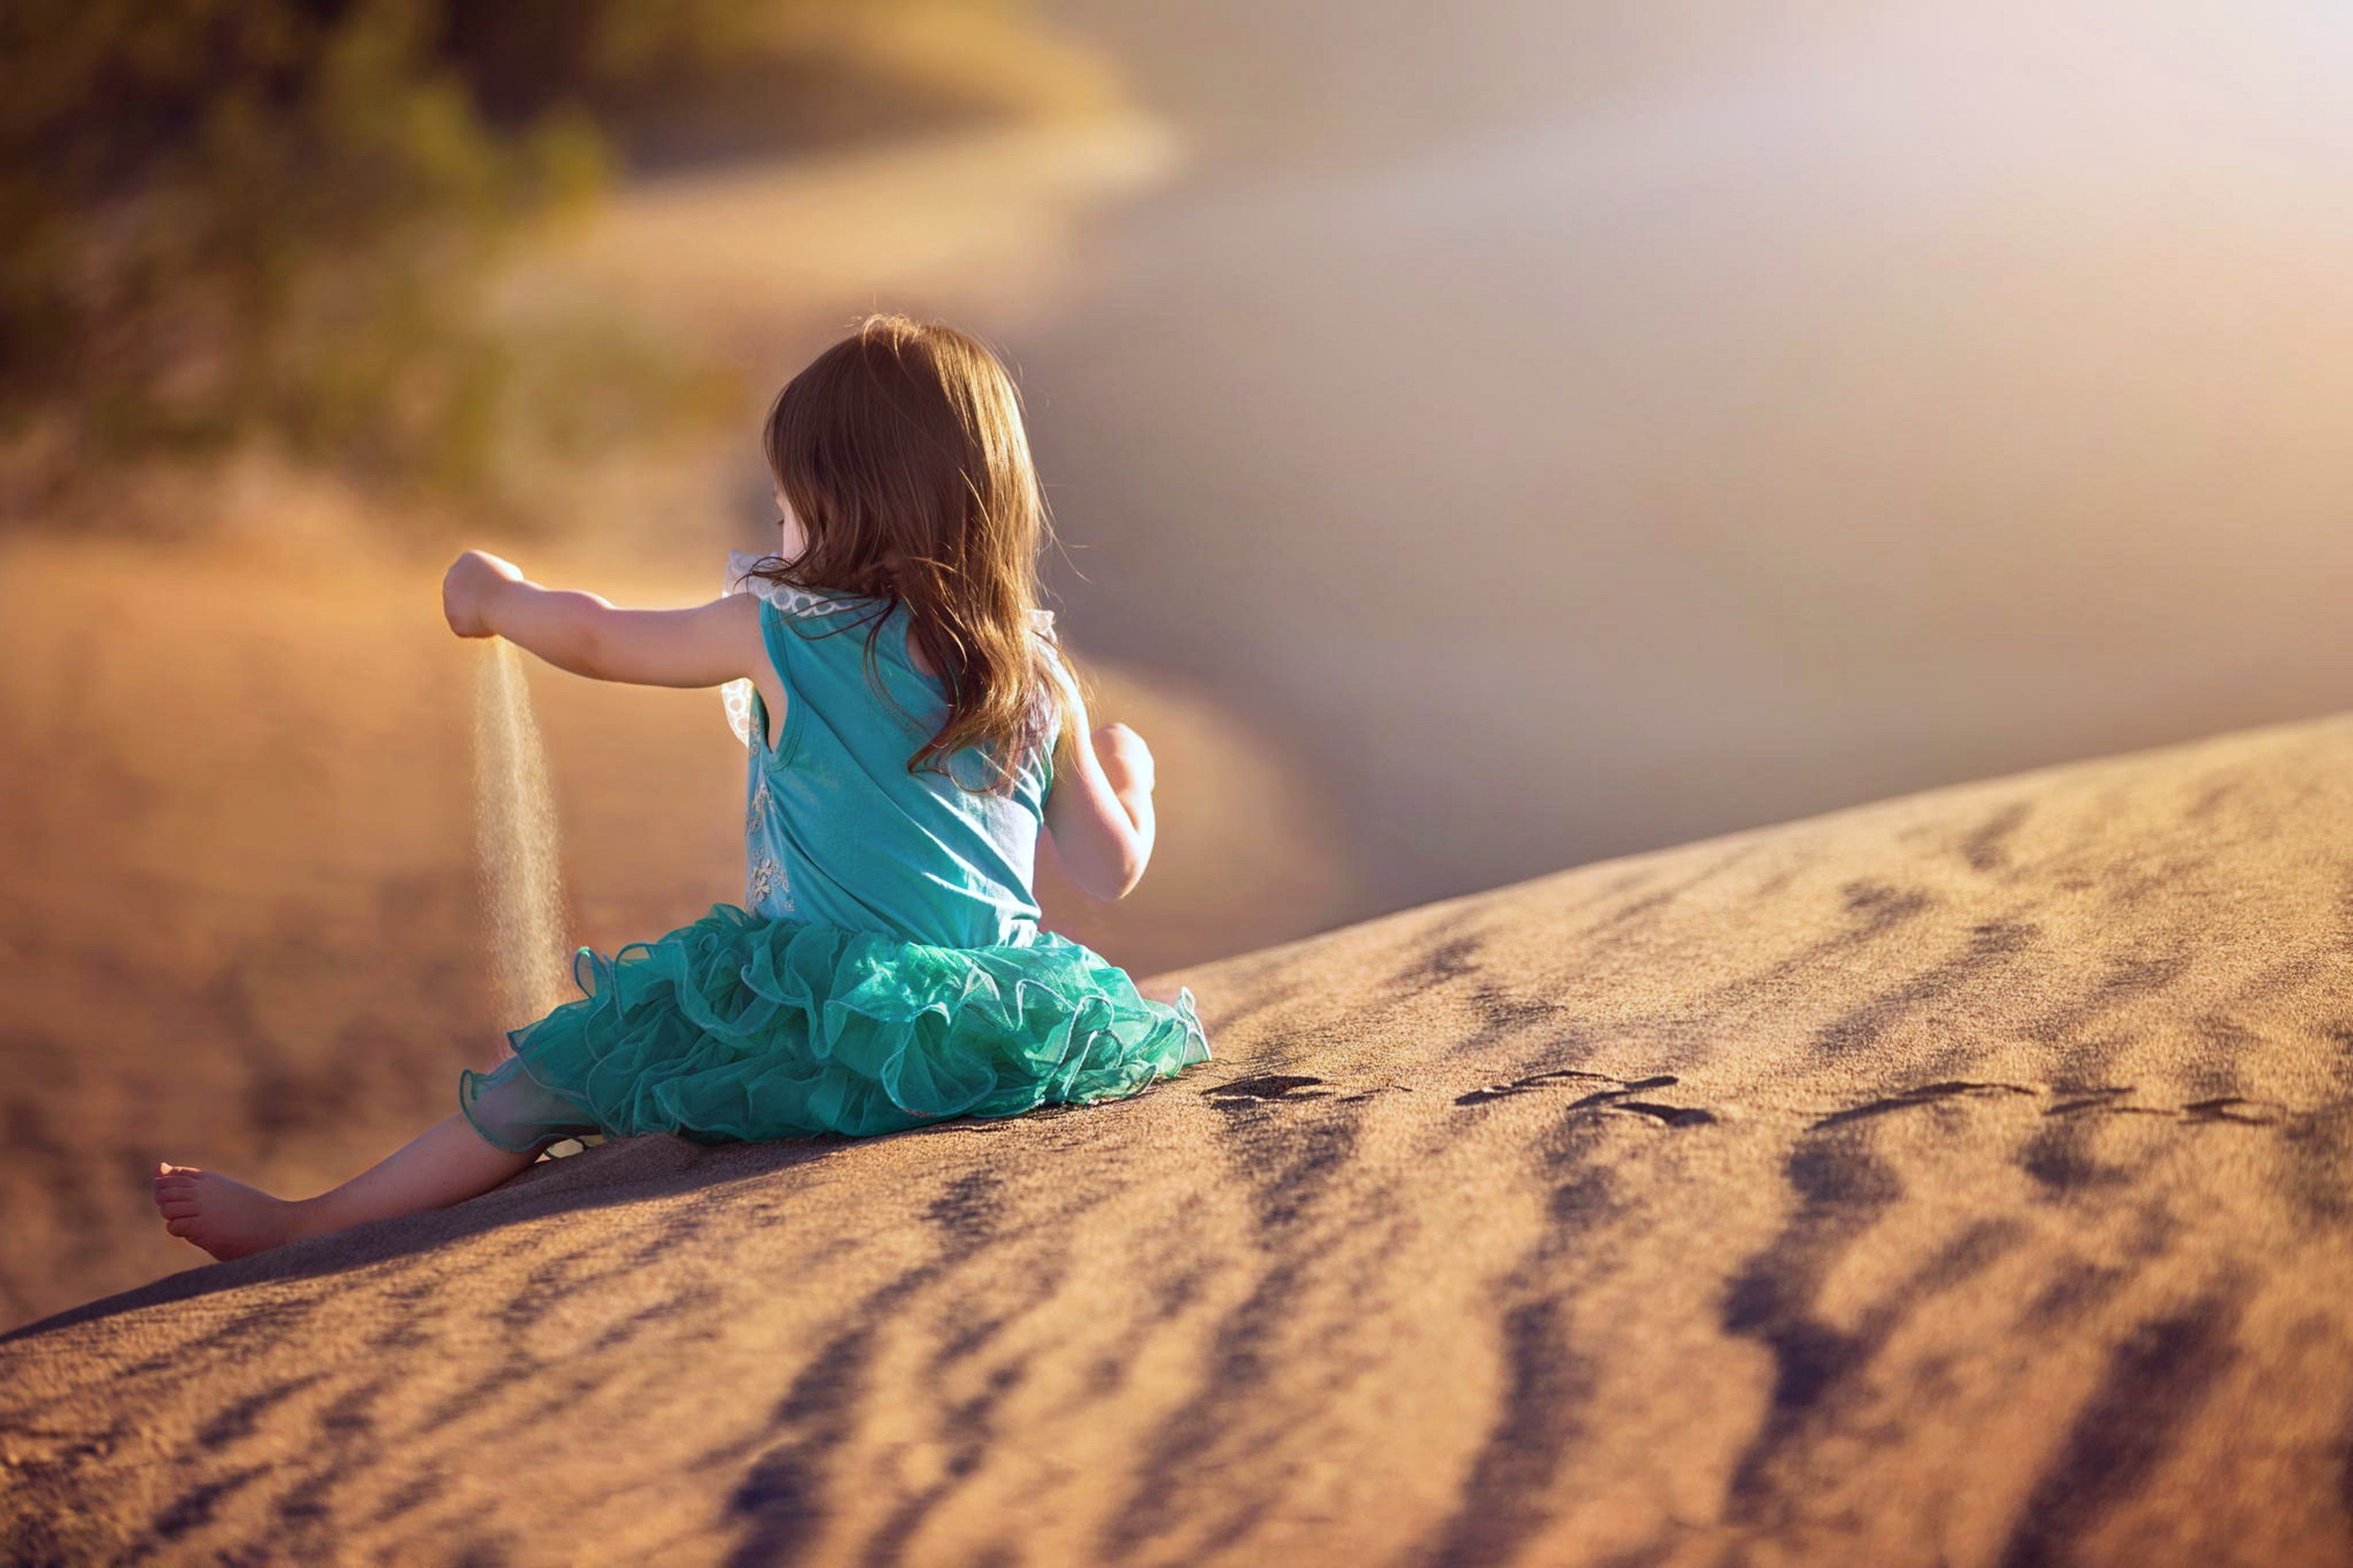 Sand little girl desert kids happy play joy funlandscapes nature ...